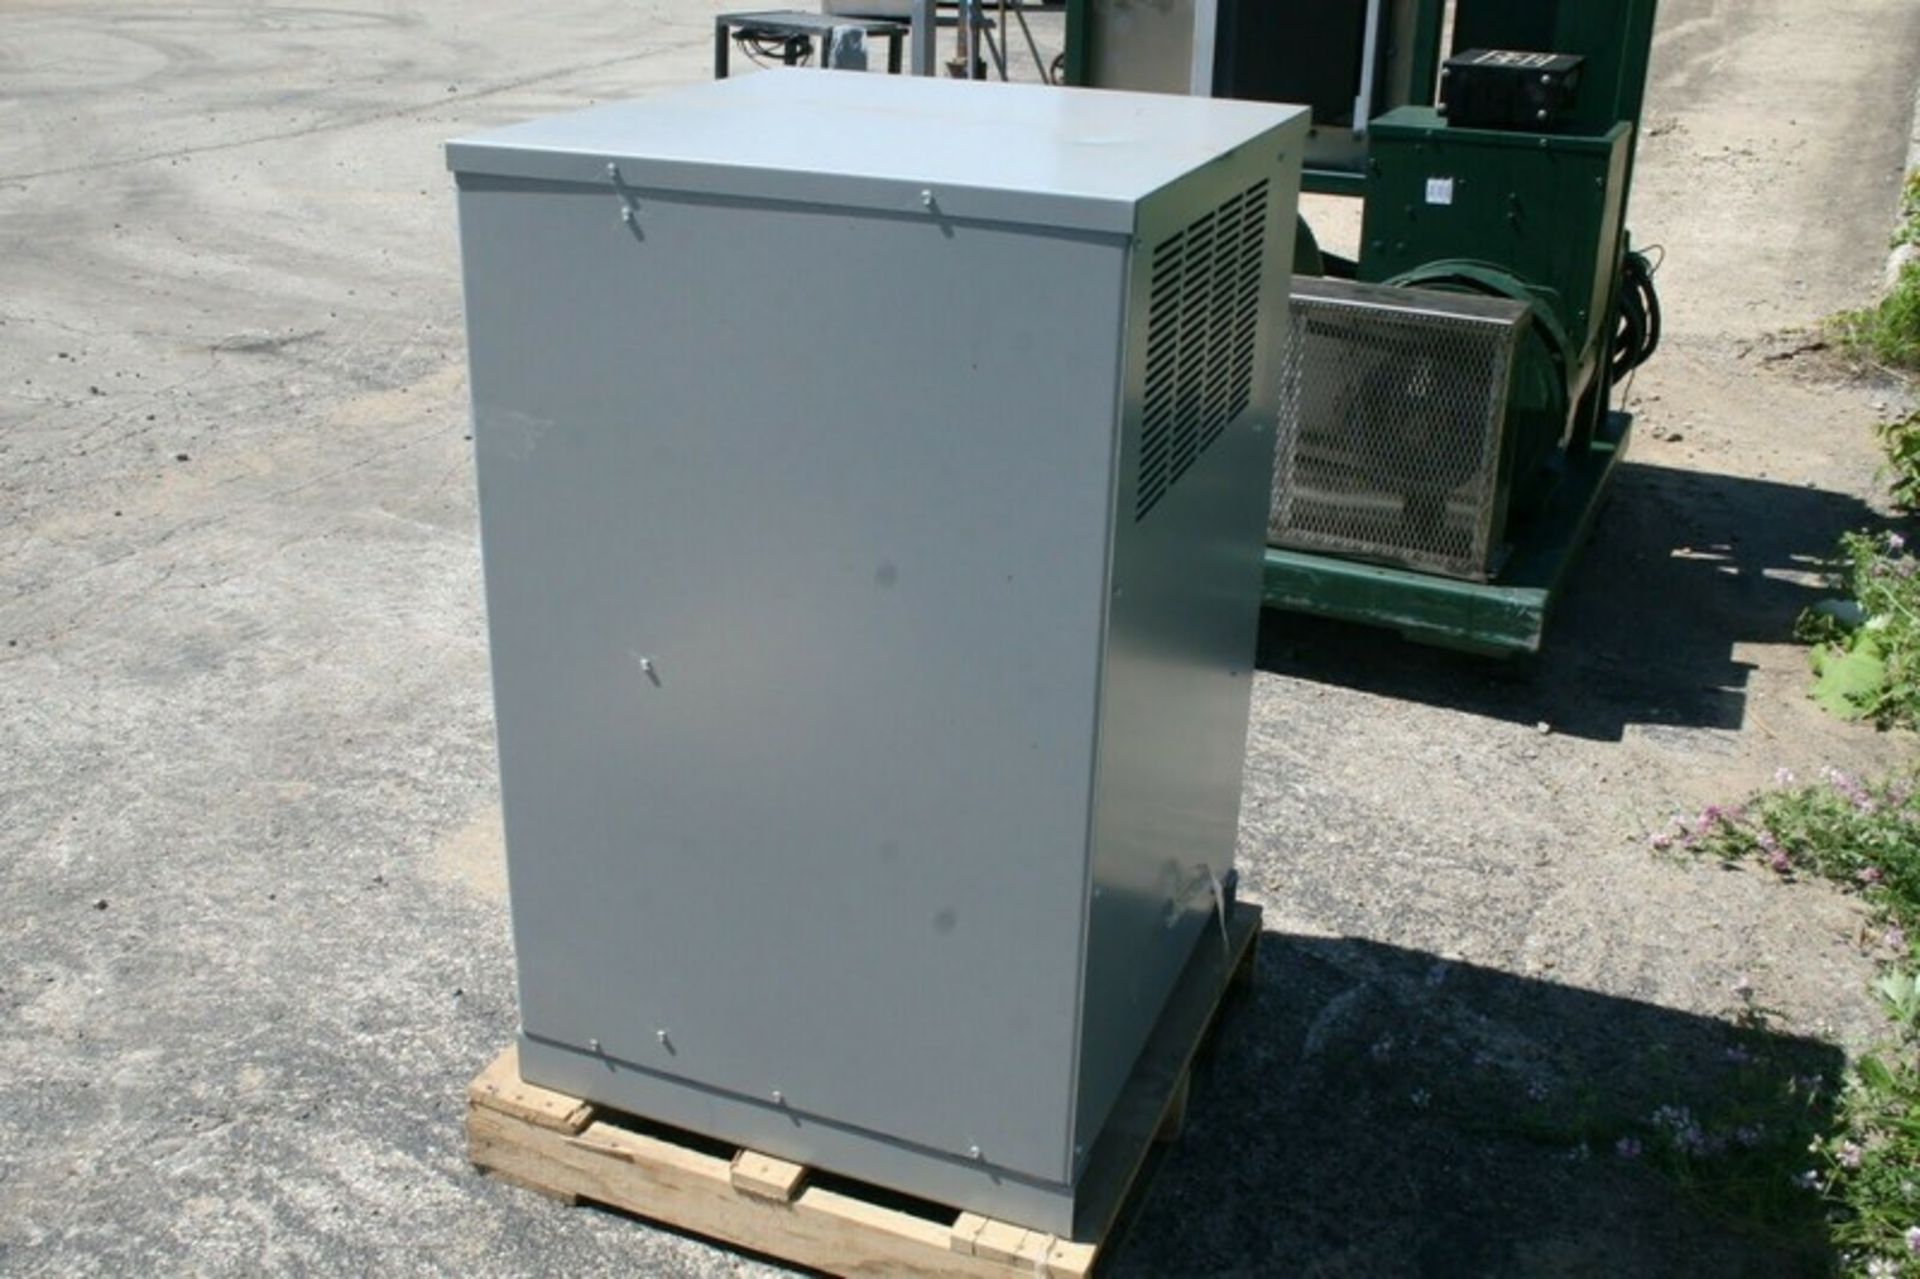 EGS Solatron Series Transformer, Catalog 63TCC320, ,S/N US500901, KVA 20, 3 Phase, 480 V Input, - Image 2 of 5